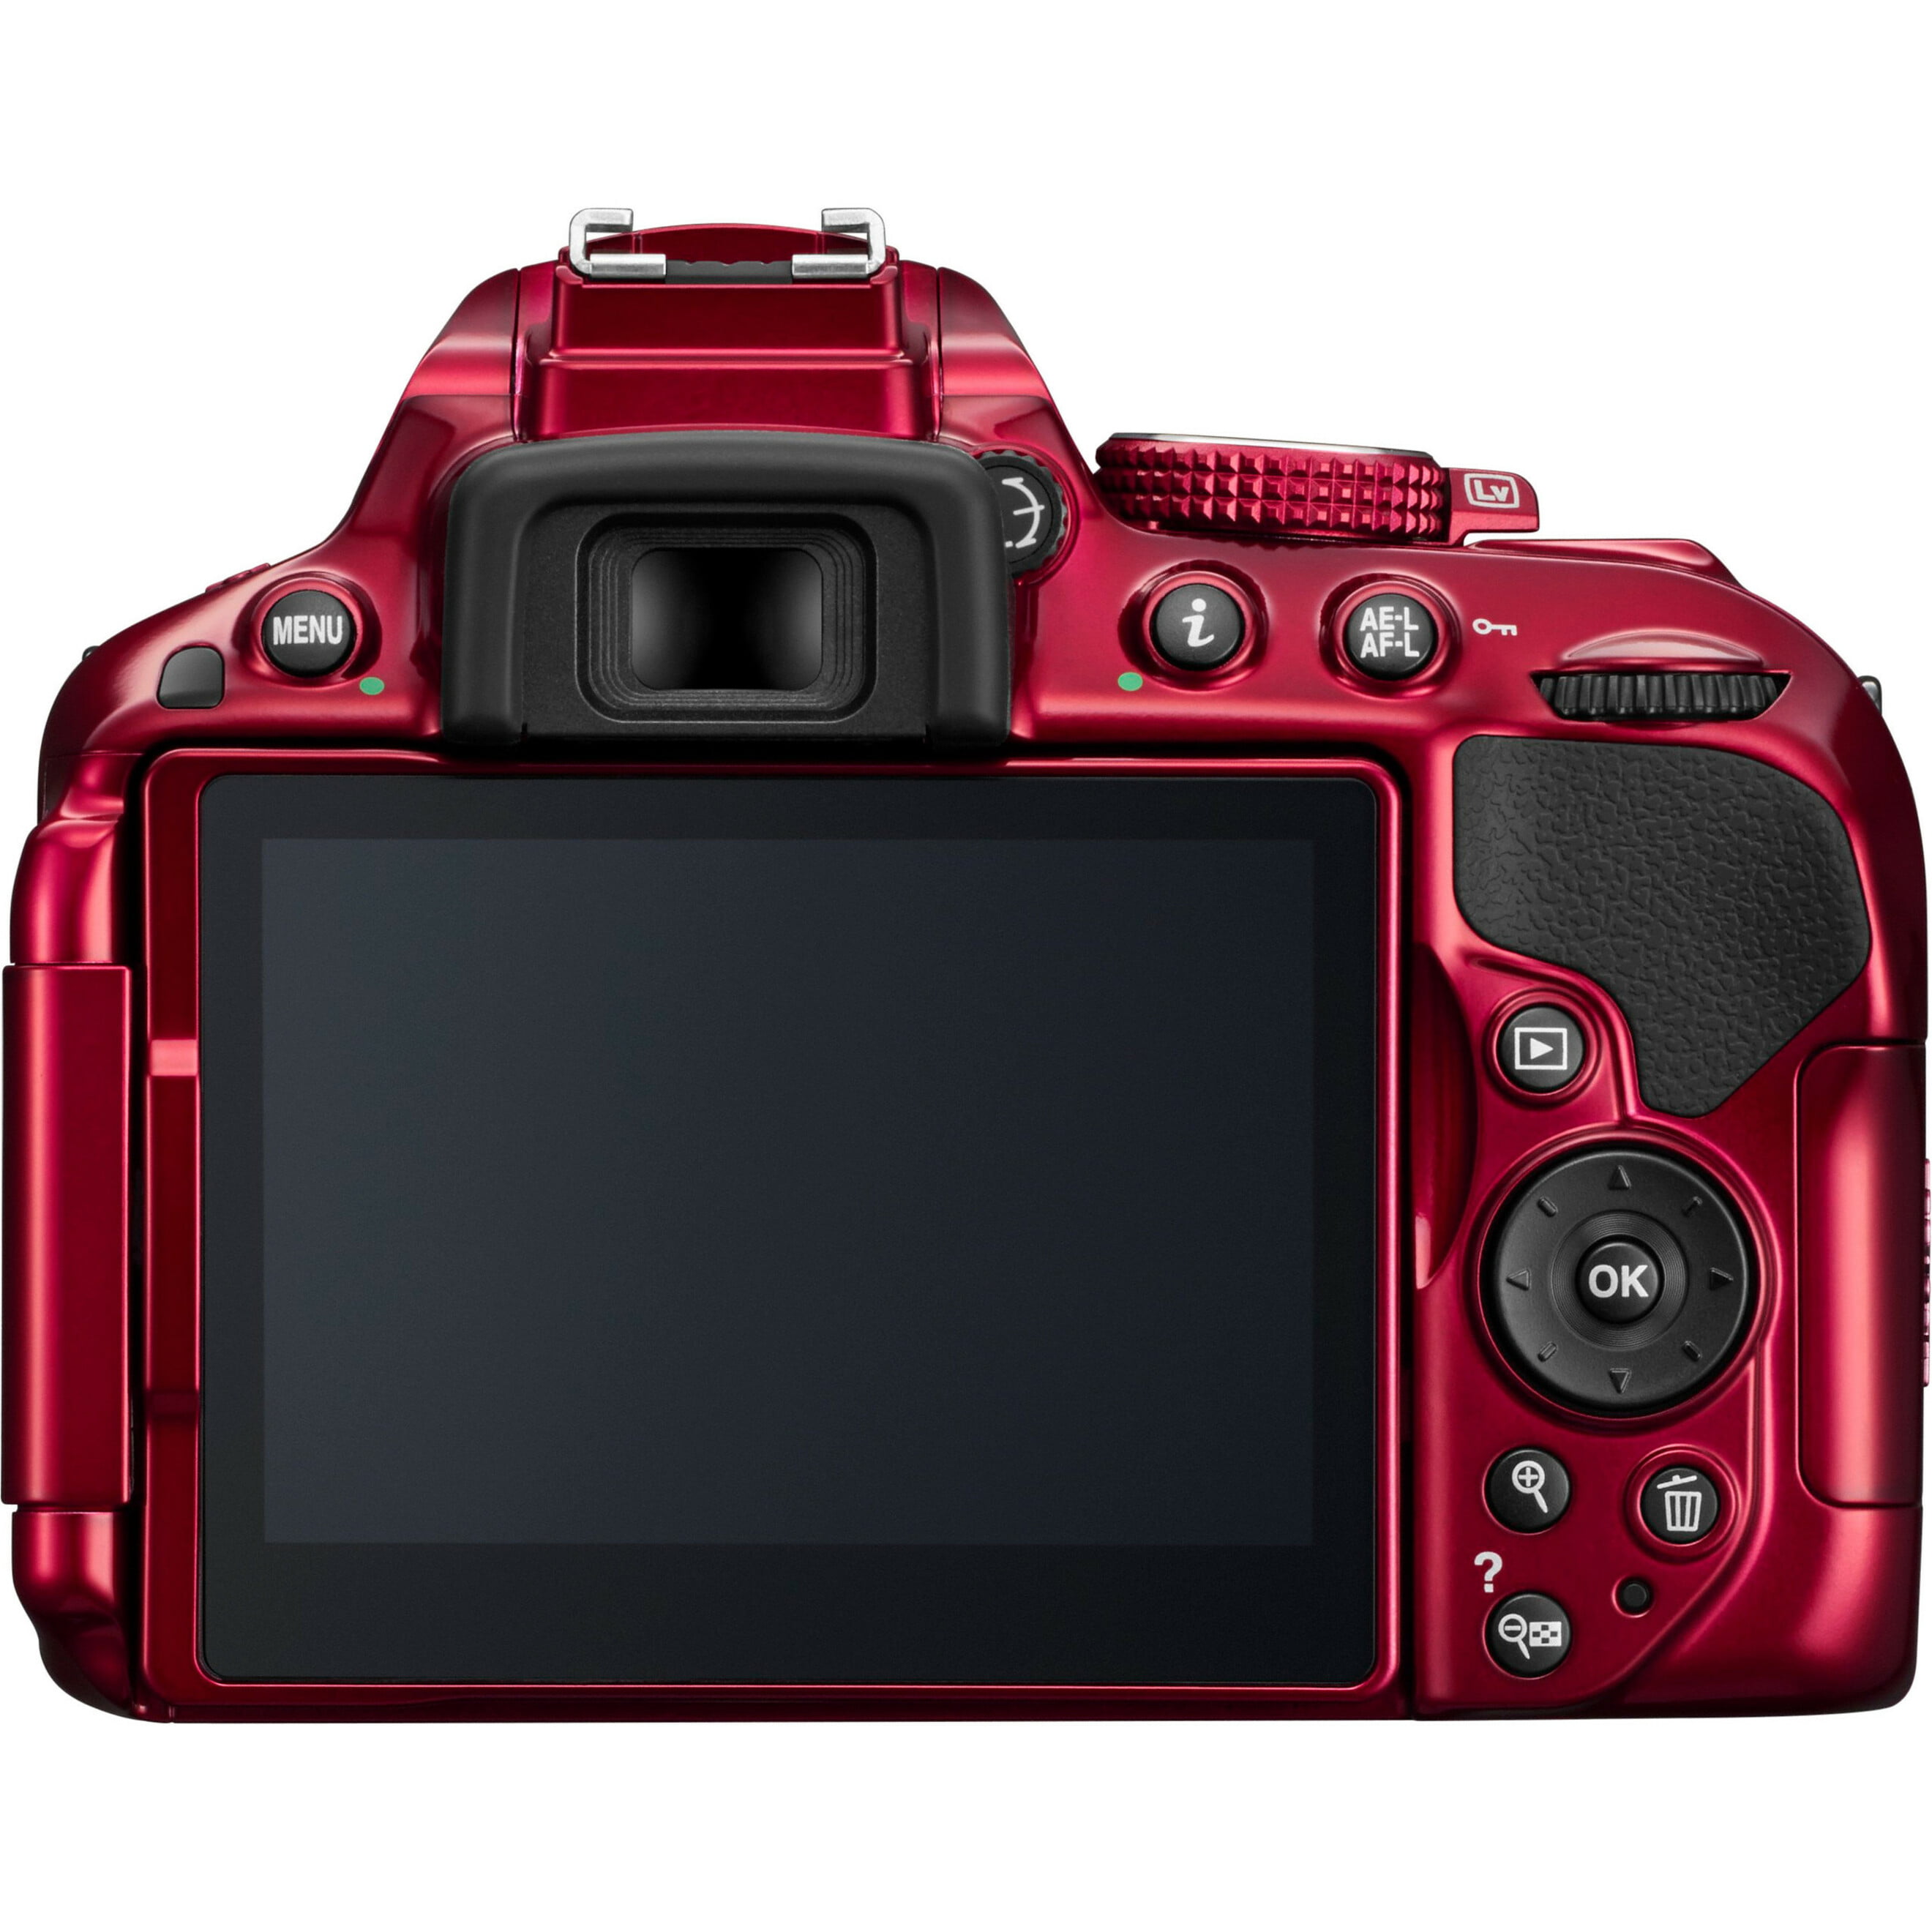 Nikon D5300 24.2 Megapixel Digital SLR Camera with Lens, 0.71